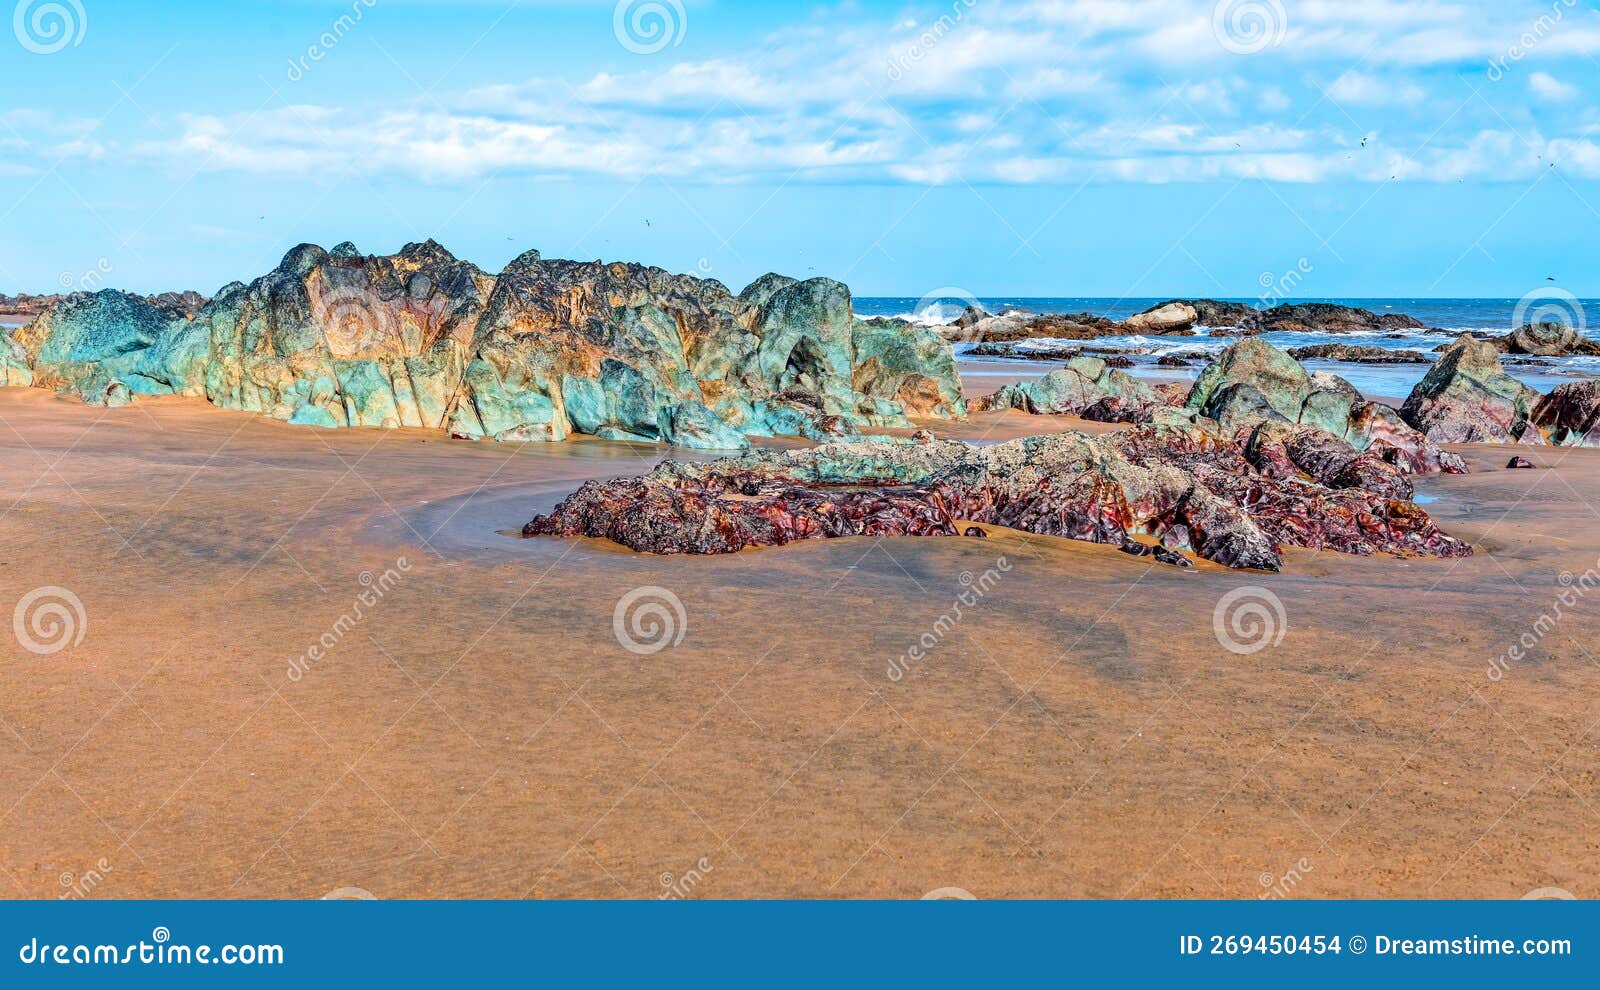 colorful rock formations at playa lagarto, located near pedasi in panama